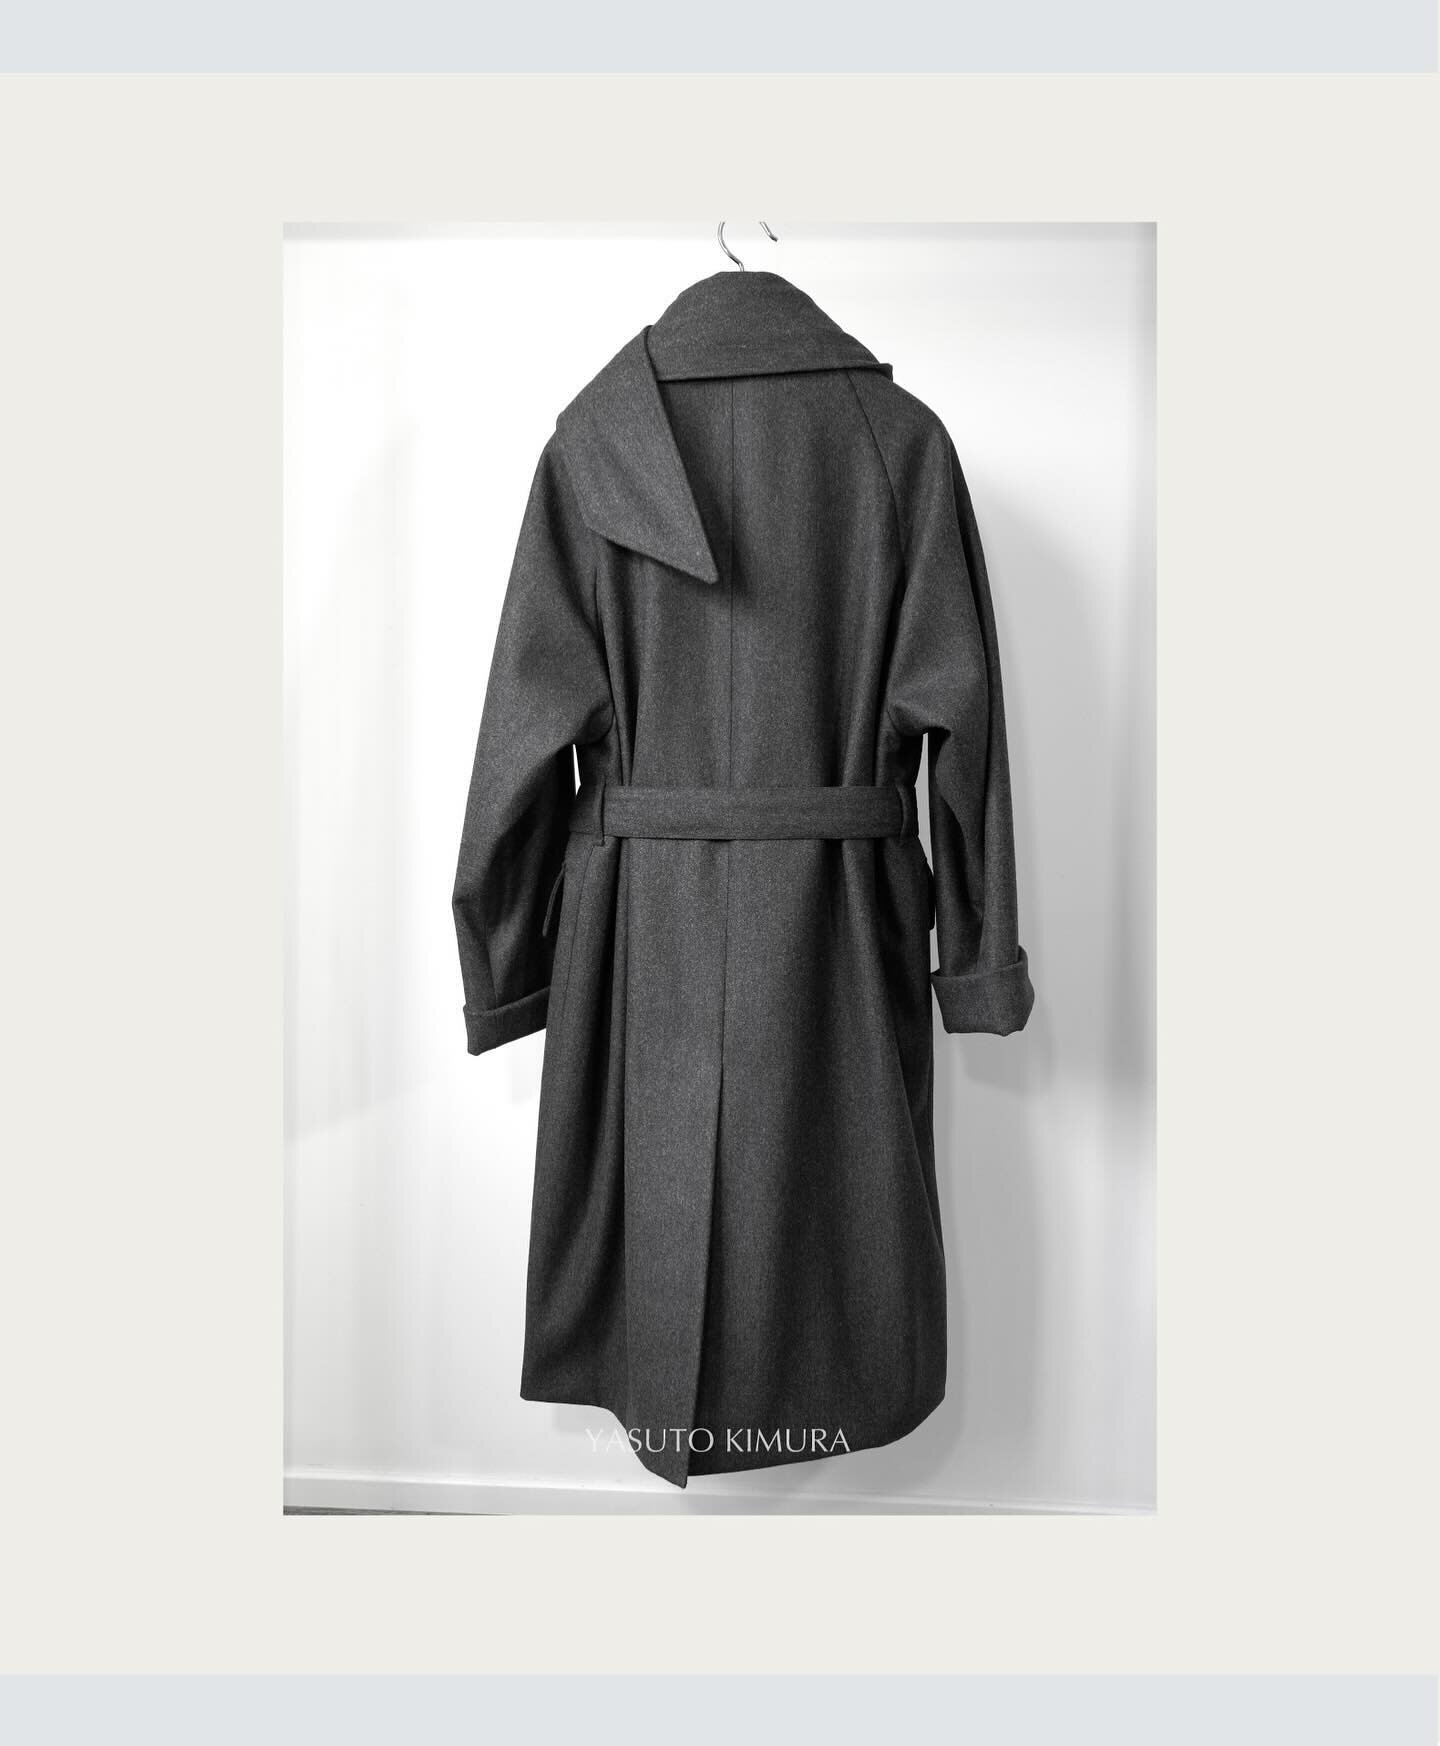 Balmacaan coat with scarf #yasutokimura #balmacaancoat #overcoat #unisexclothing #madetoorder #tailormade